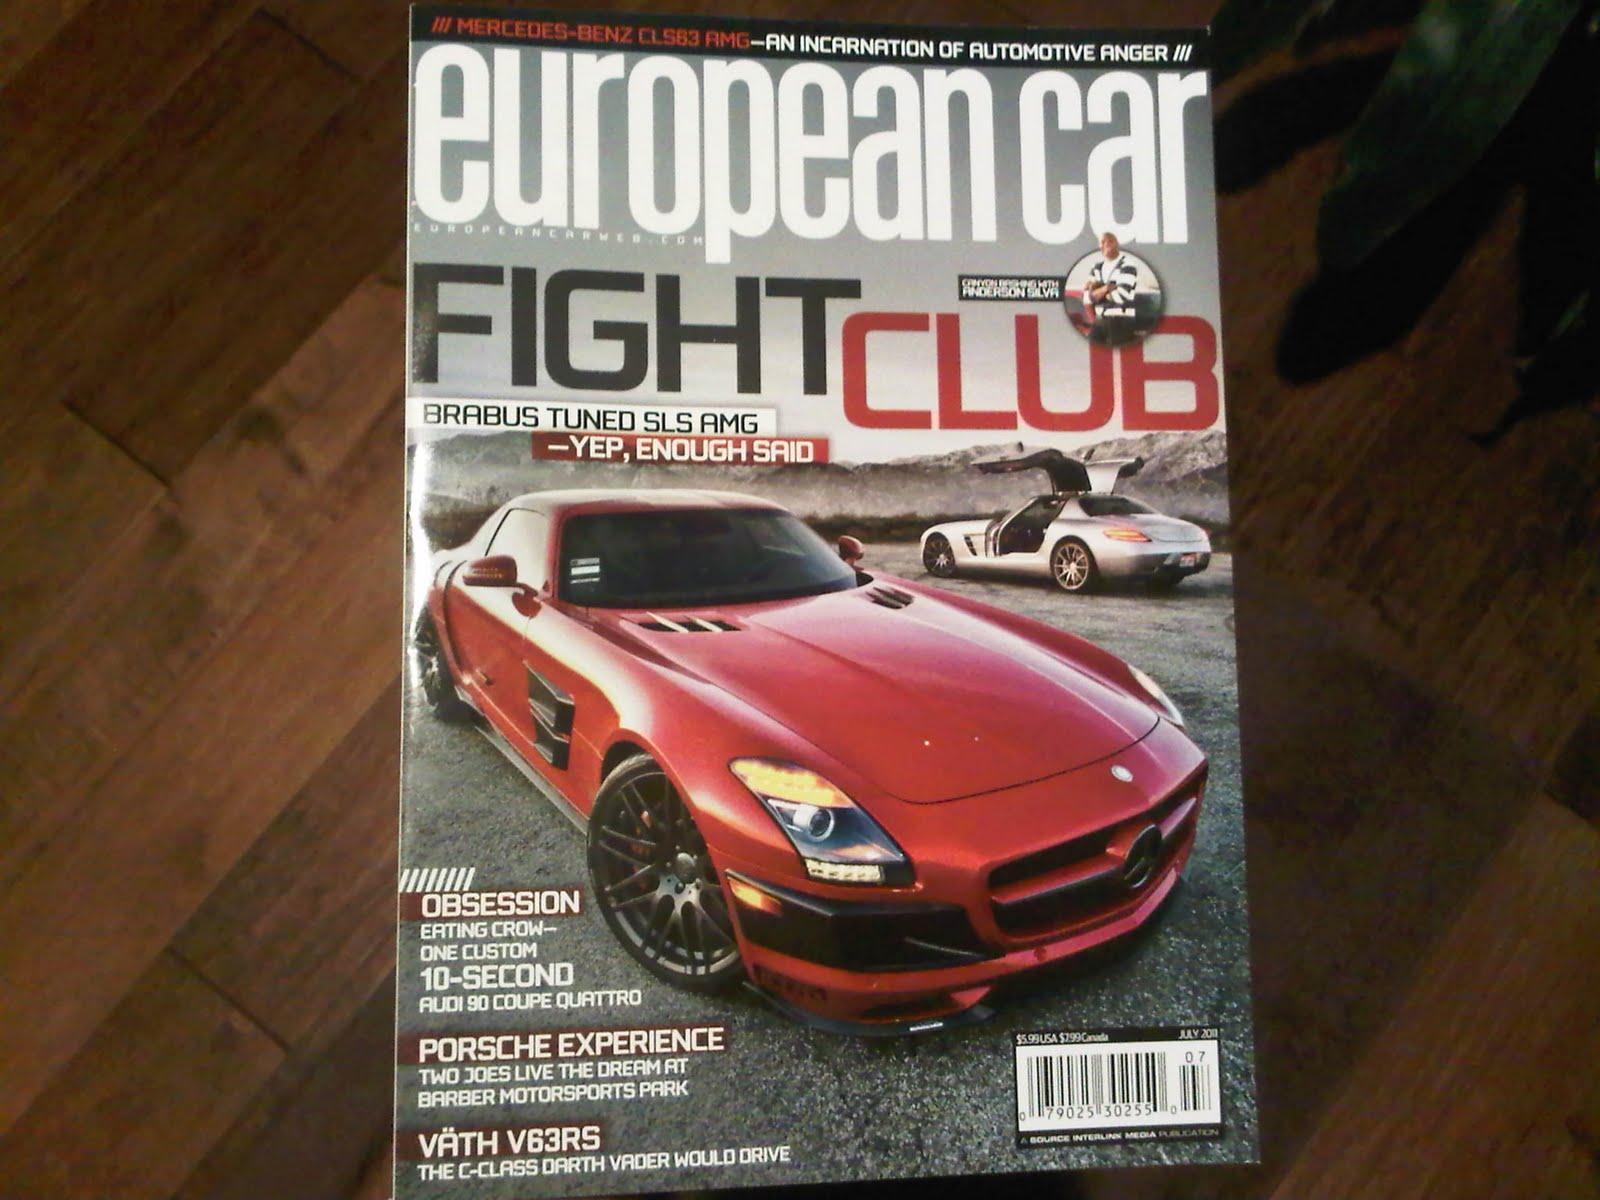 http://4.bp.blogspot.com/-qzIKxH-kVa0/TeQUfW7Yz2I/AAAAAAAAAZo/SoSTetjL2VI/s1600/Singh+Autosport+European+Car+Magazine.jpg